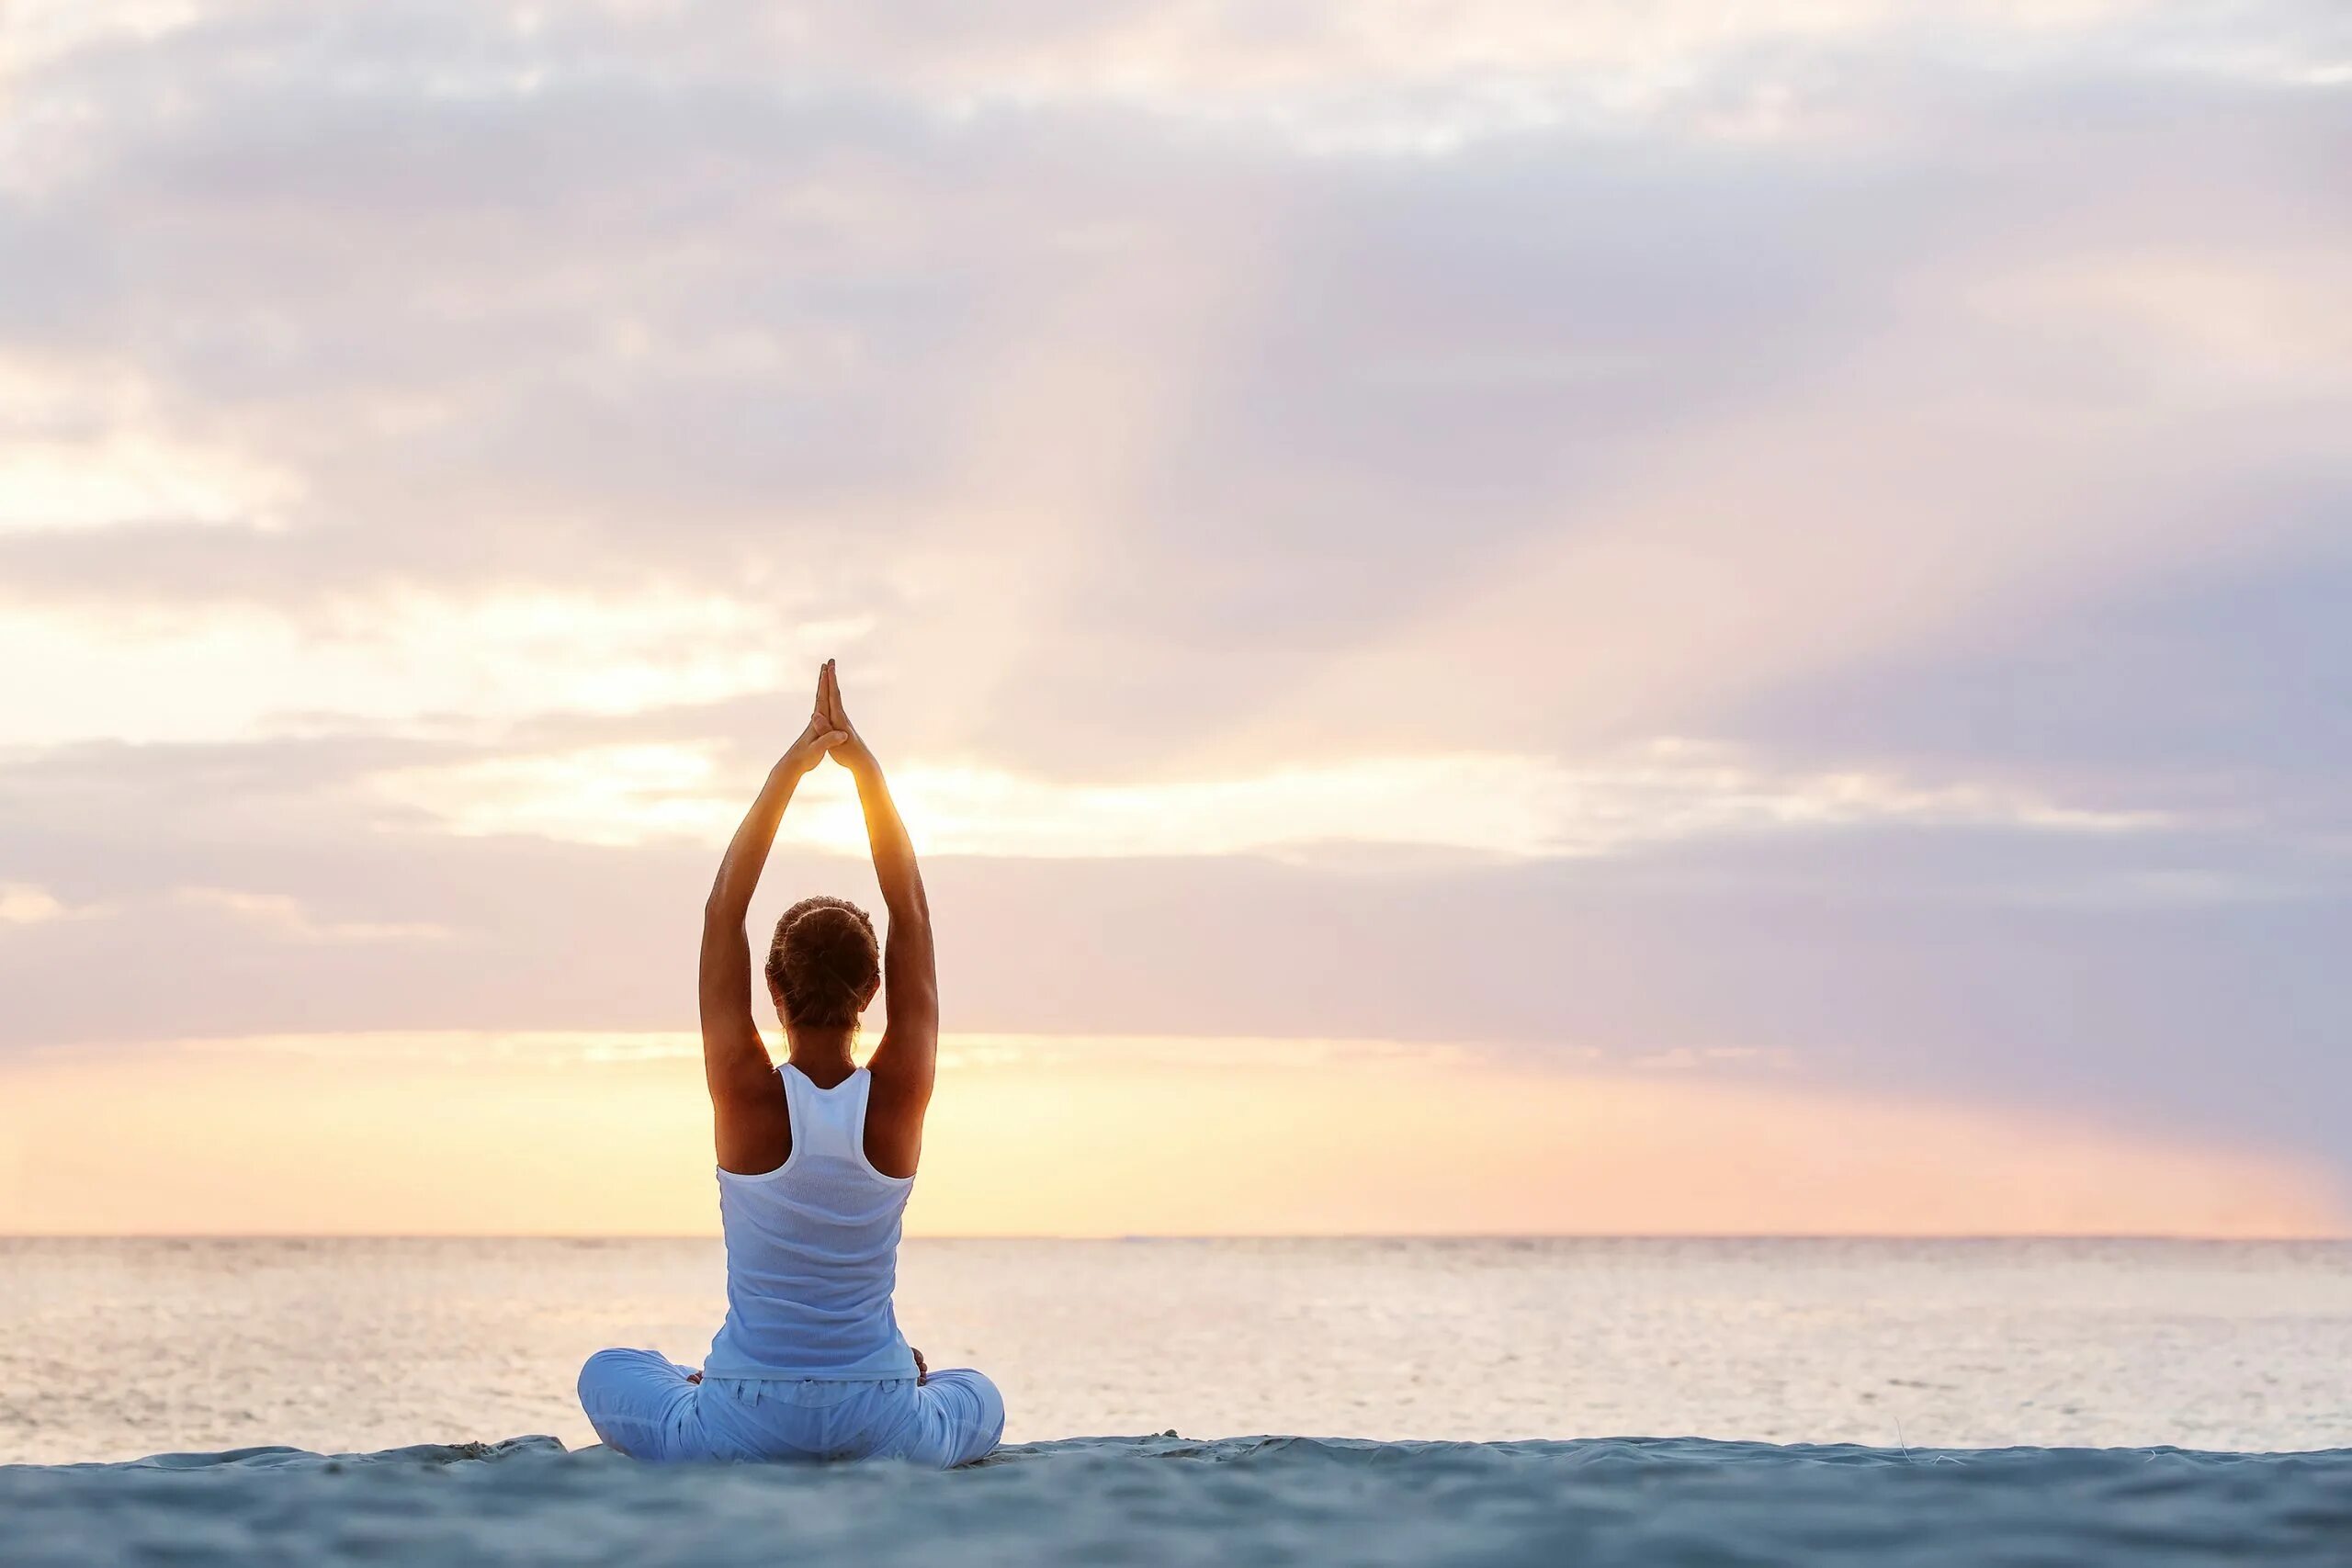 Йога на море. Медитация на берегу моря. Занятие йогой на берегу моря. Человек медитирует на море.